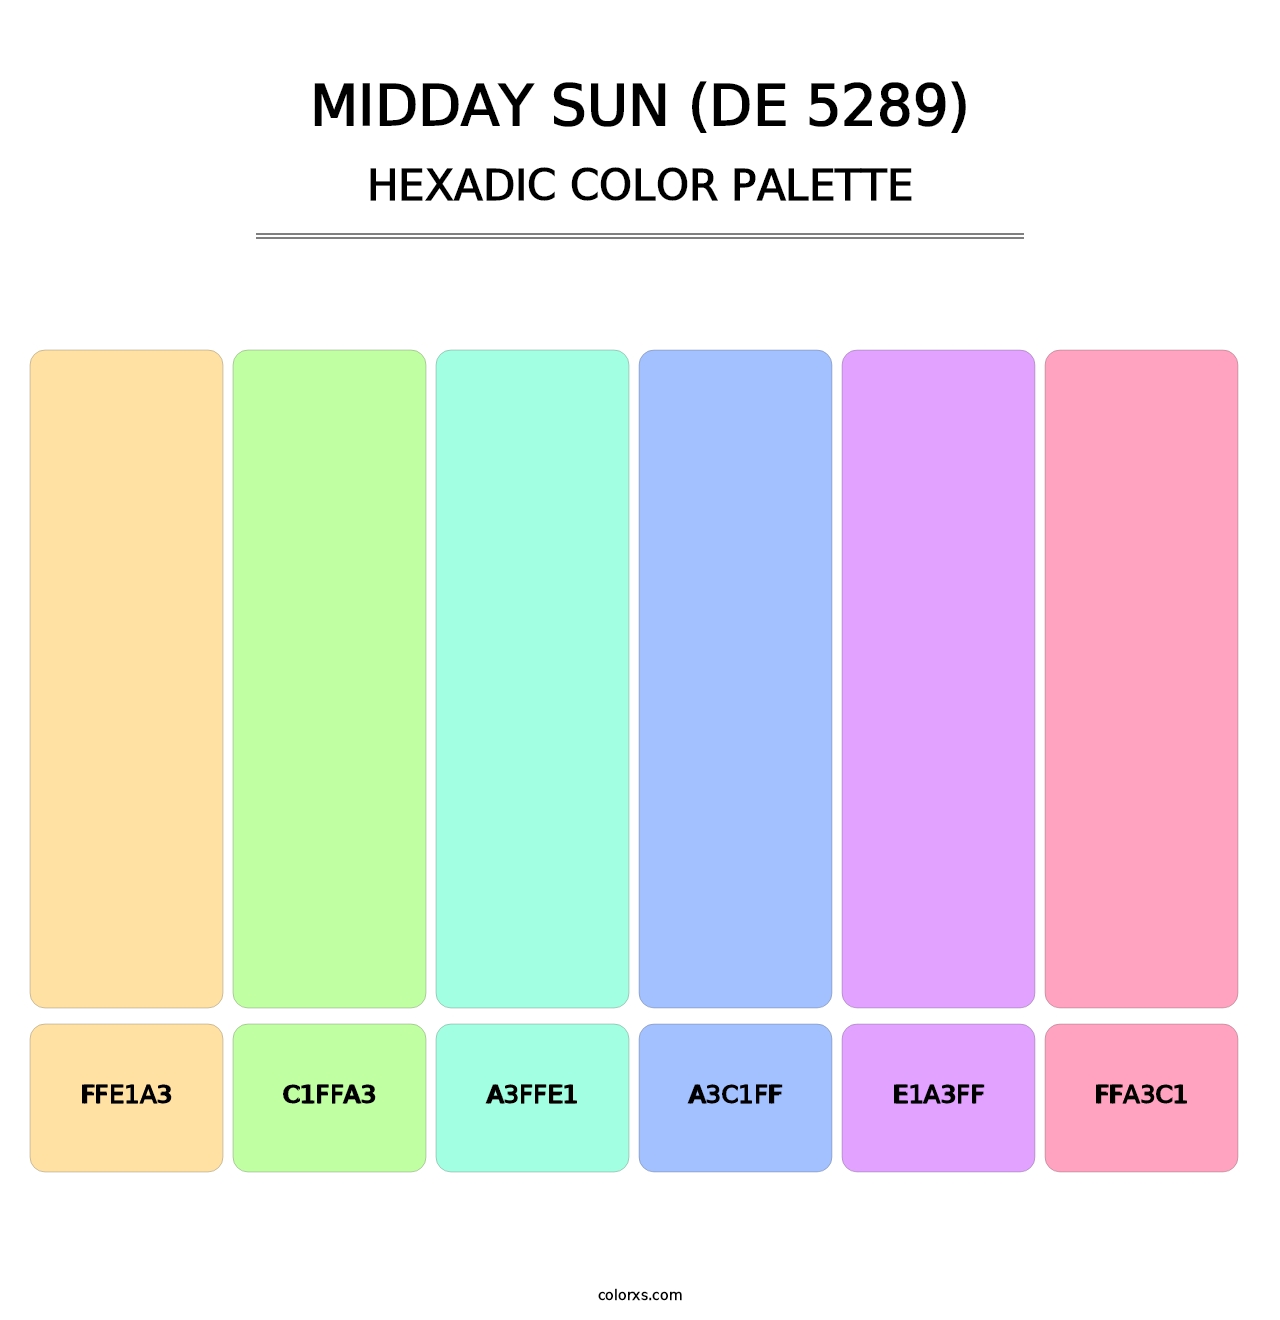 Midday Sun (DE 5289) - Hexadic Color Palette